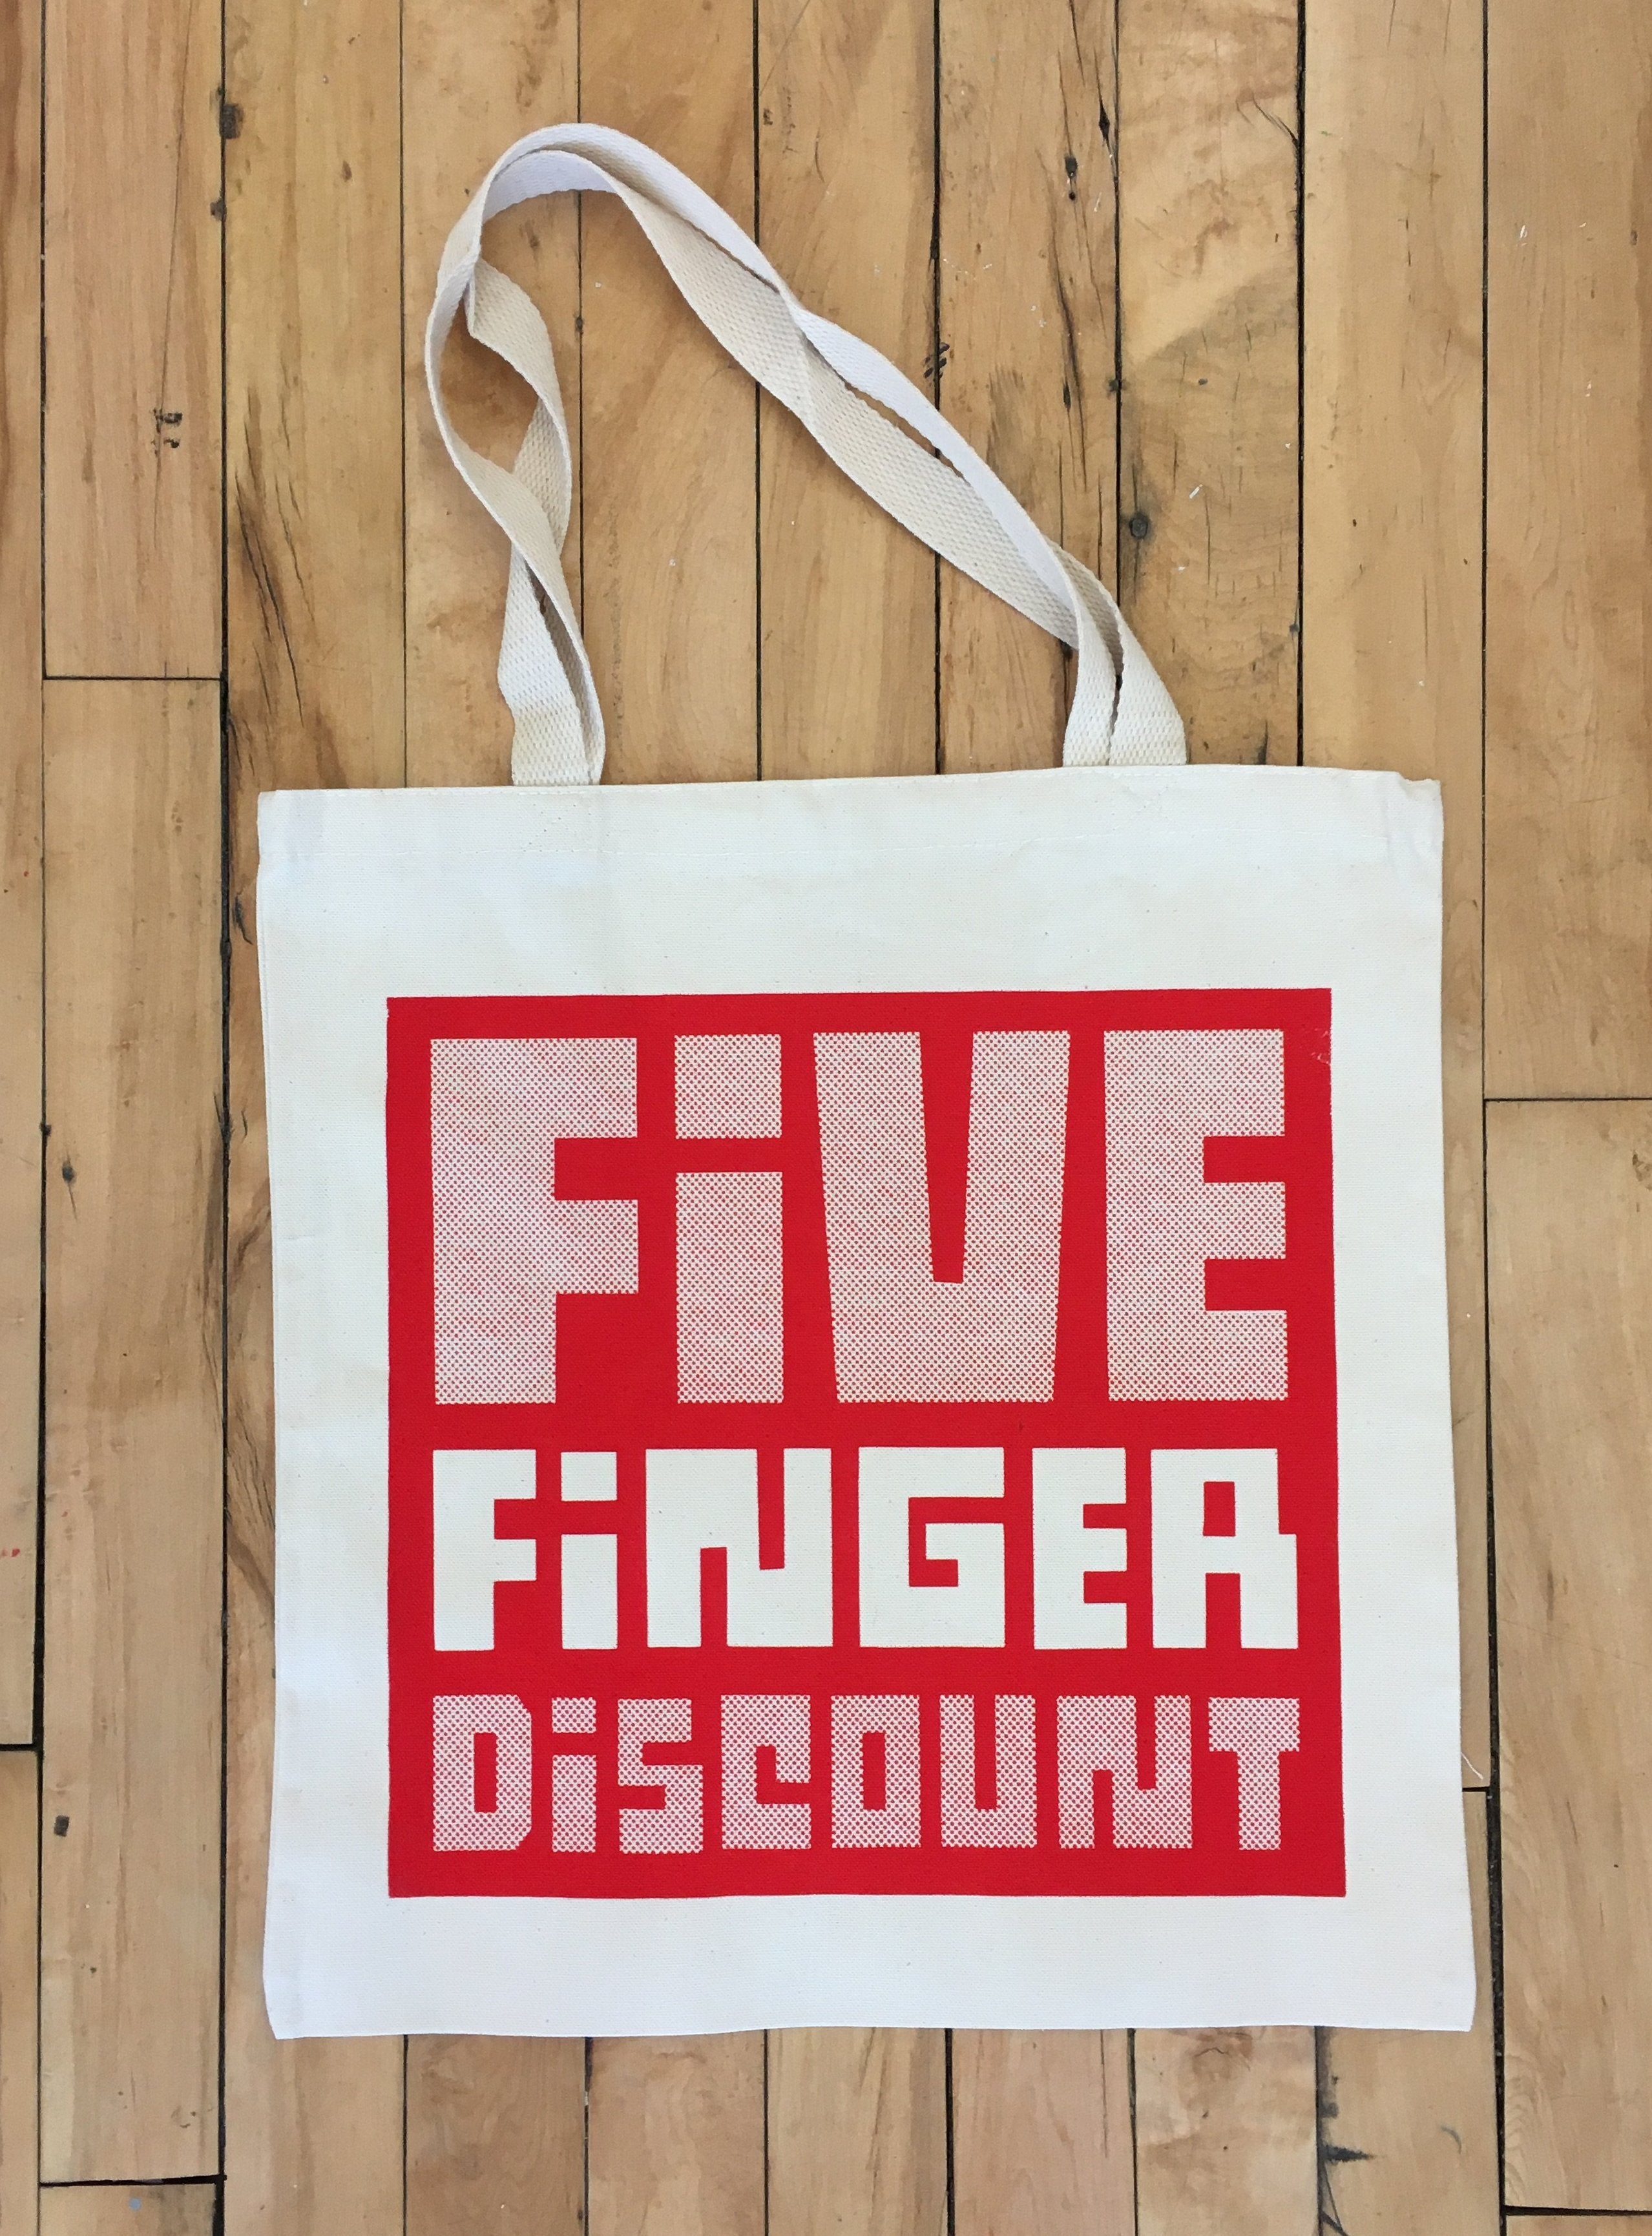 "Five Finger Discount" by Skewville